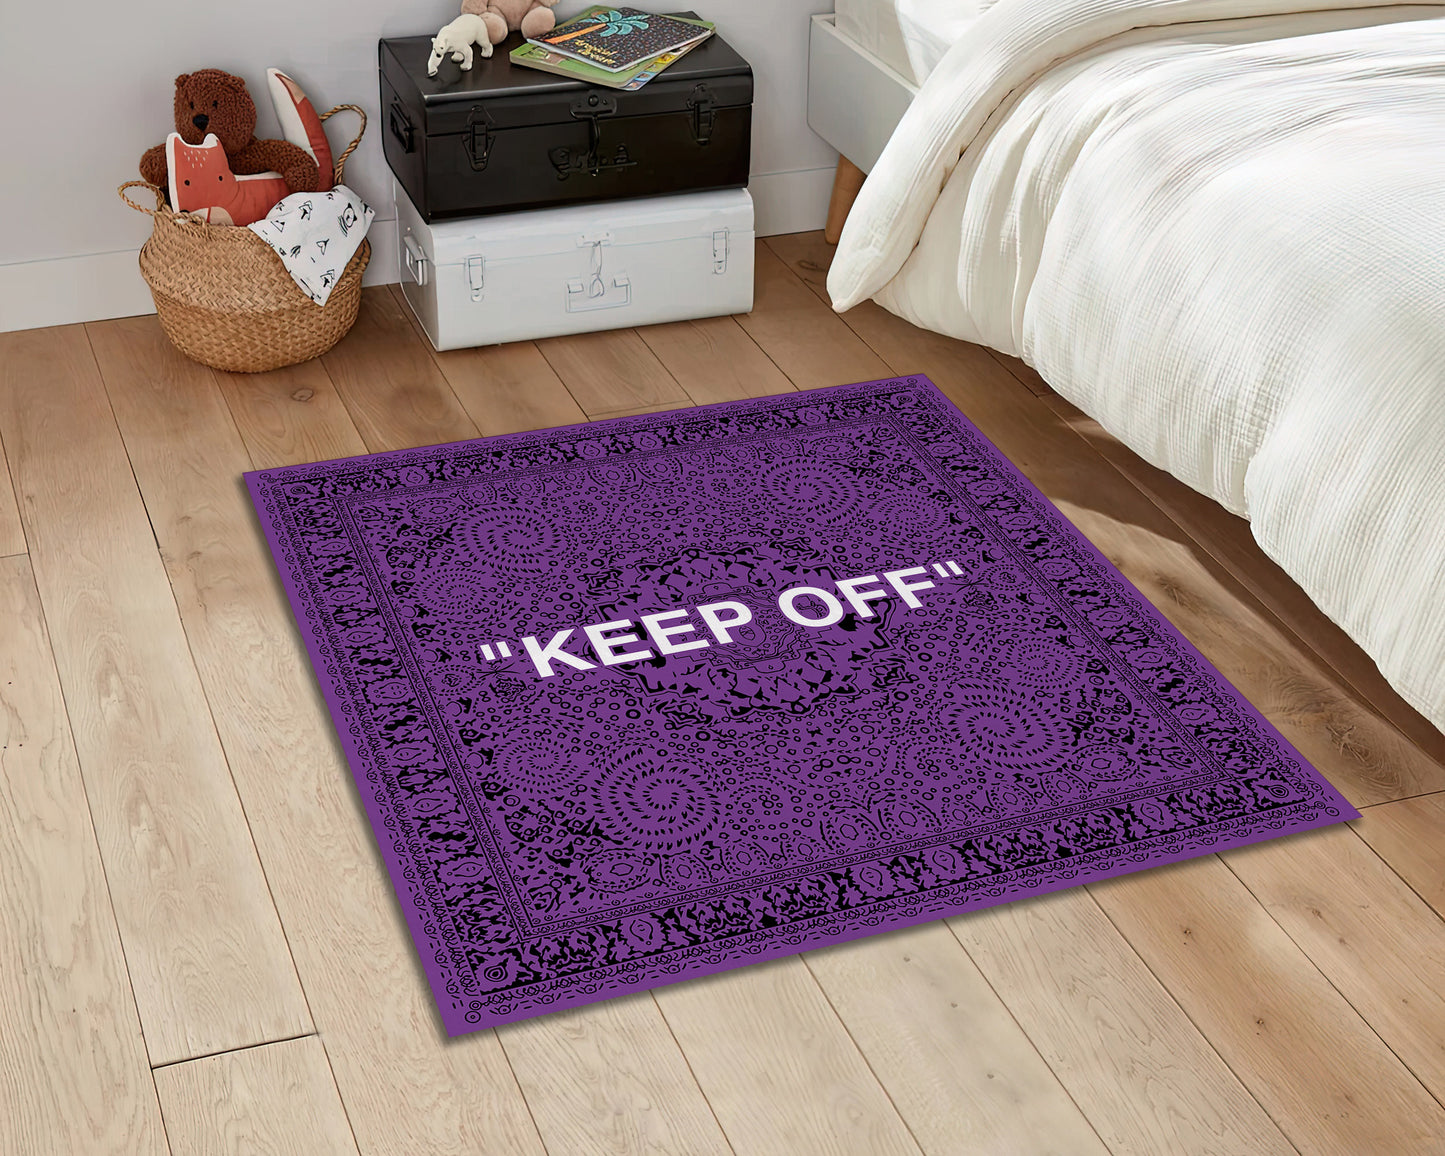 Keep Off Rug, Virgil Abloh Carpet, Keepoff Themed Mat, IKEA Carpet, Sneaker Room Rug, Hypebeast Decor